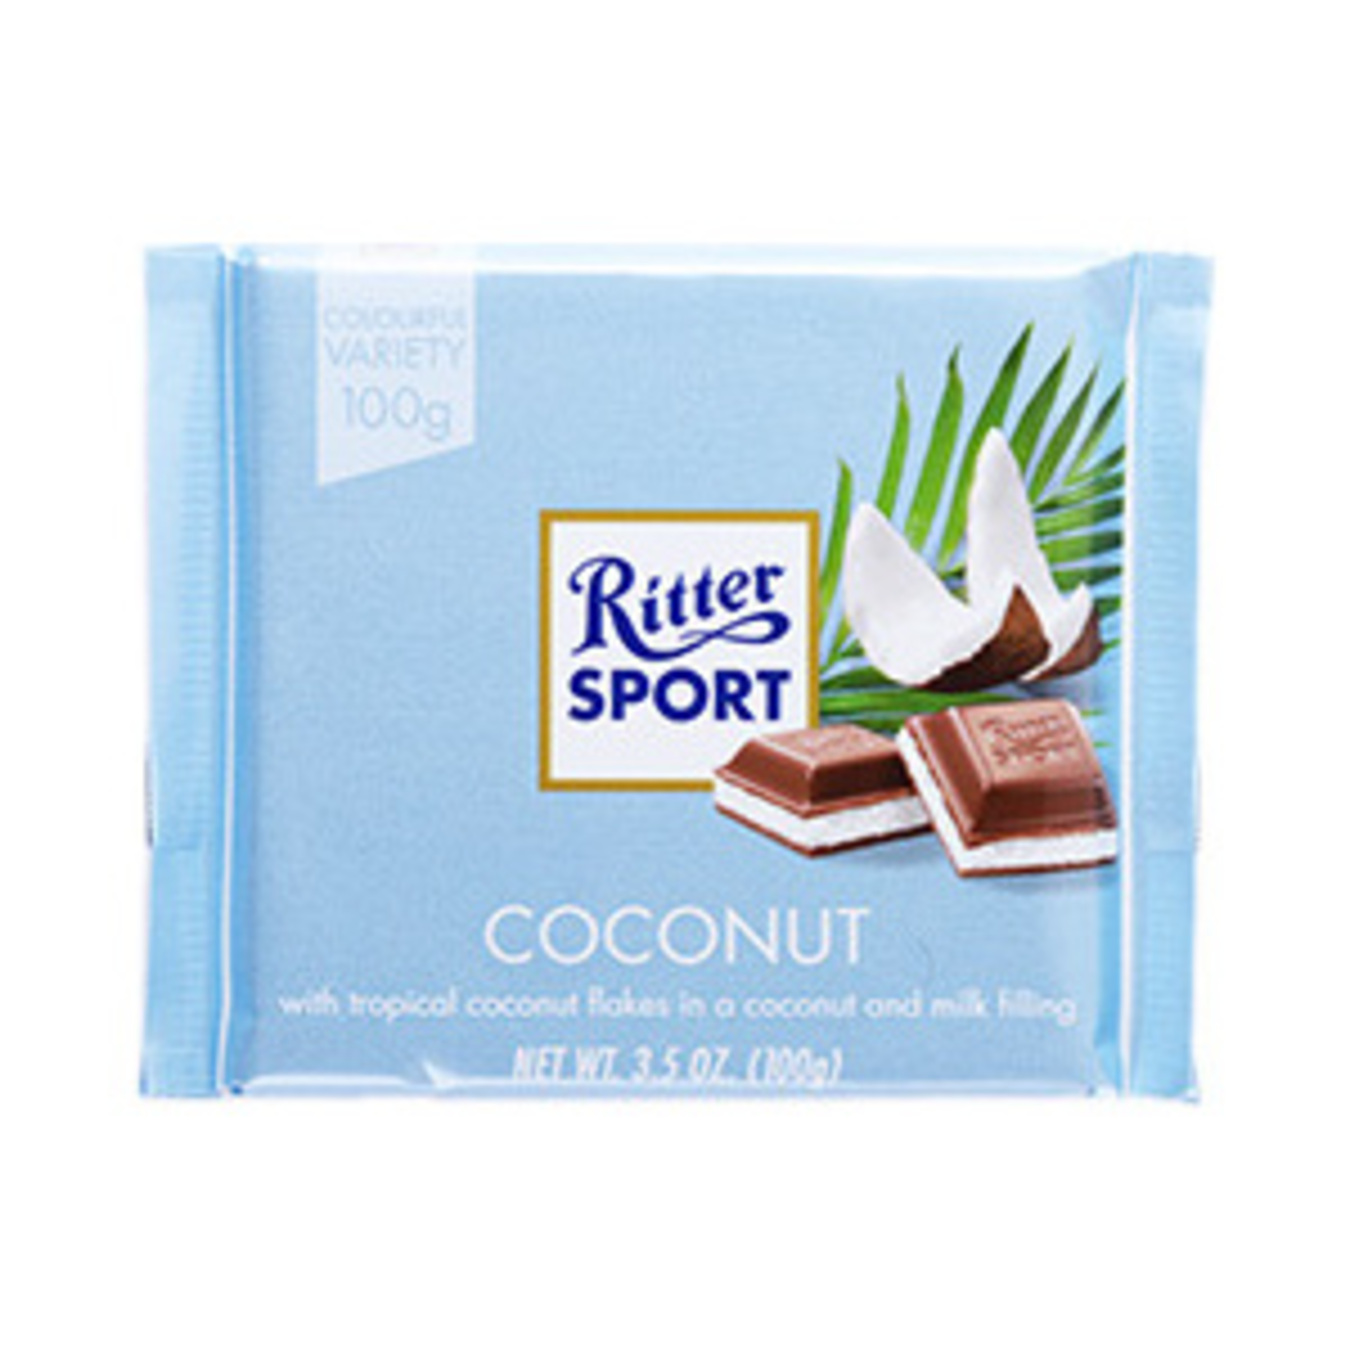 Ritter sport coconut-cream milk chocolate 100g